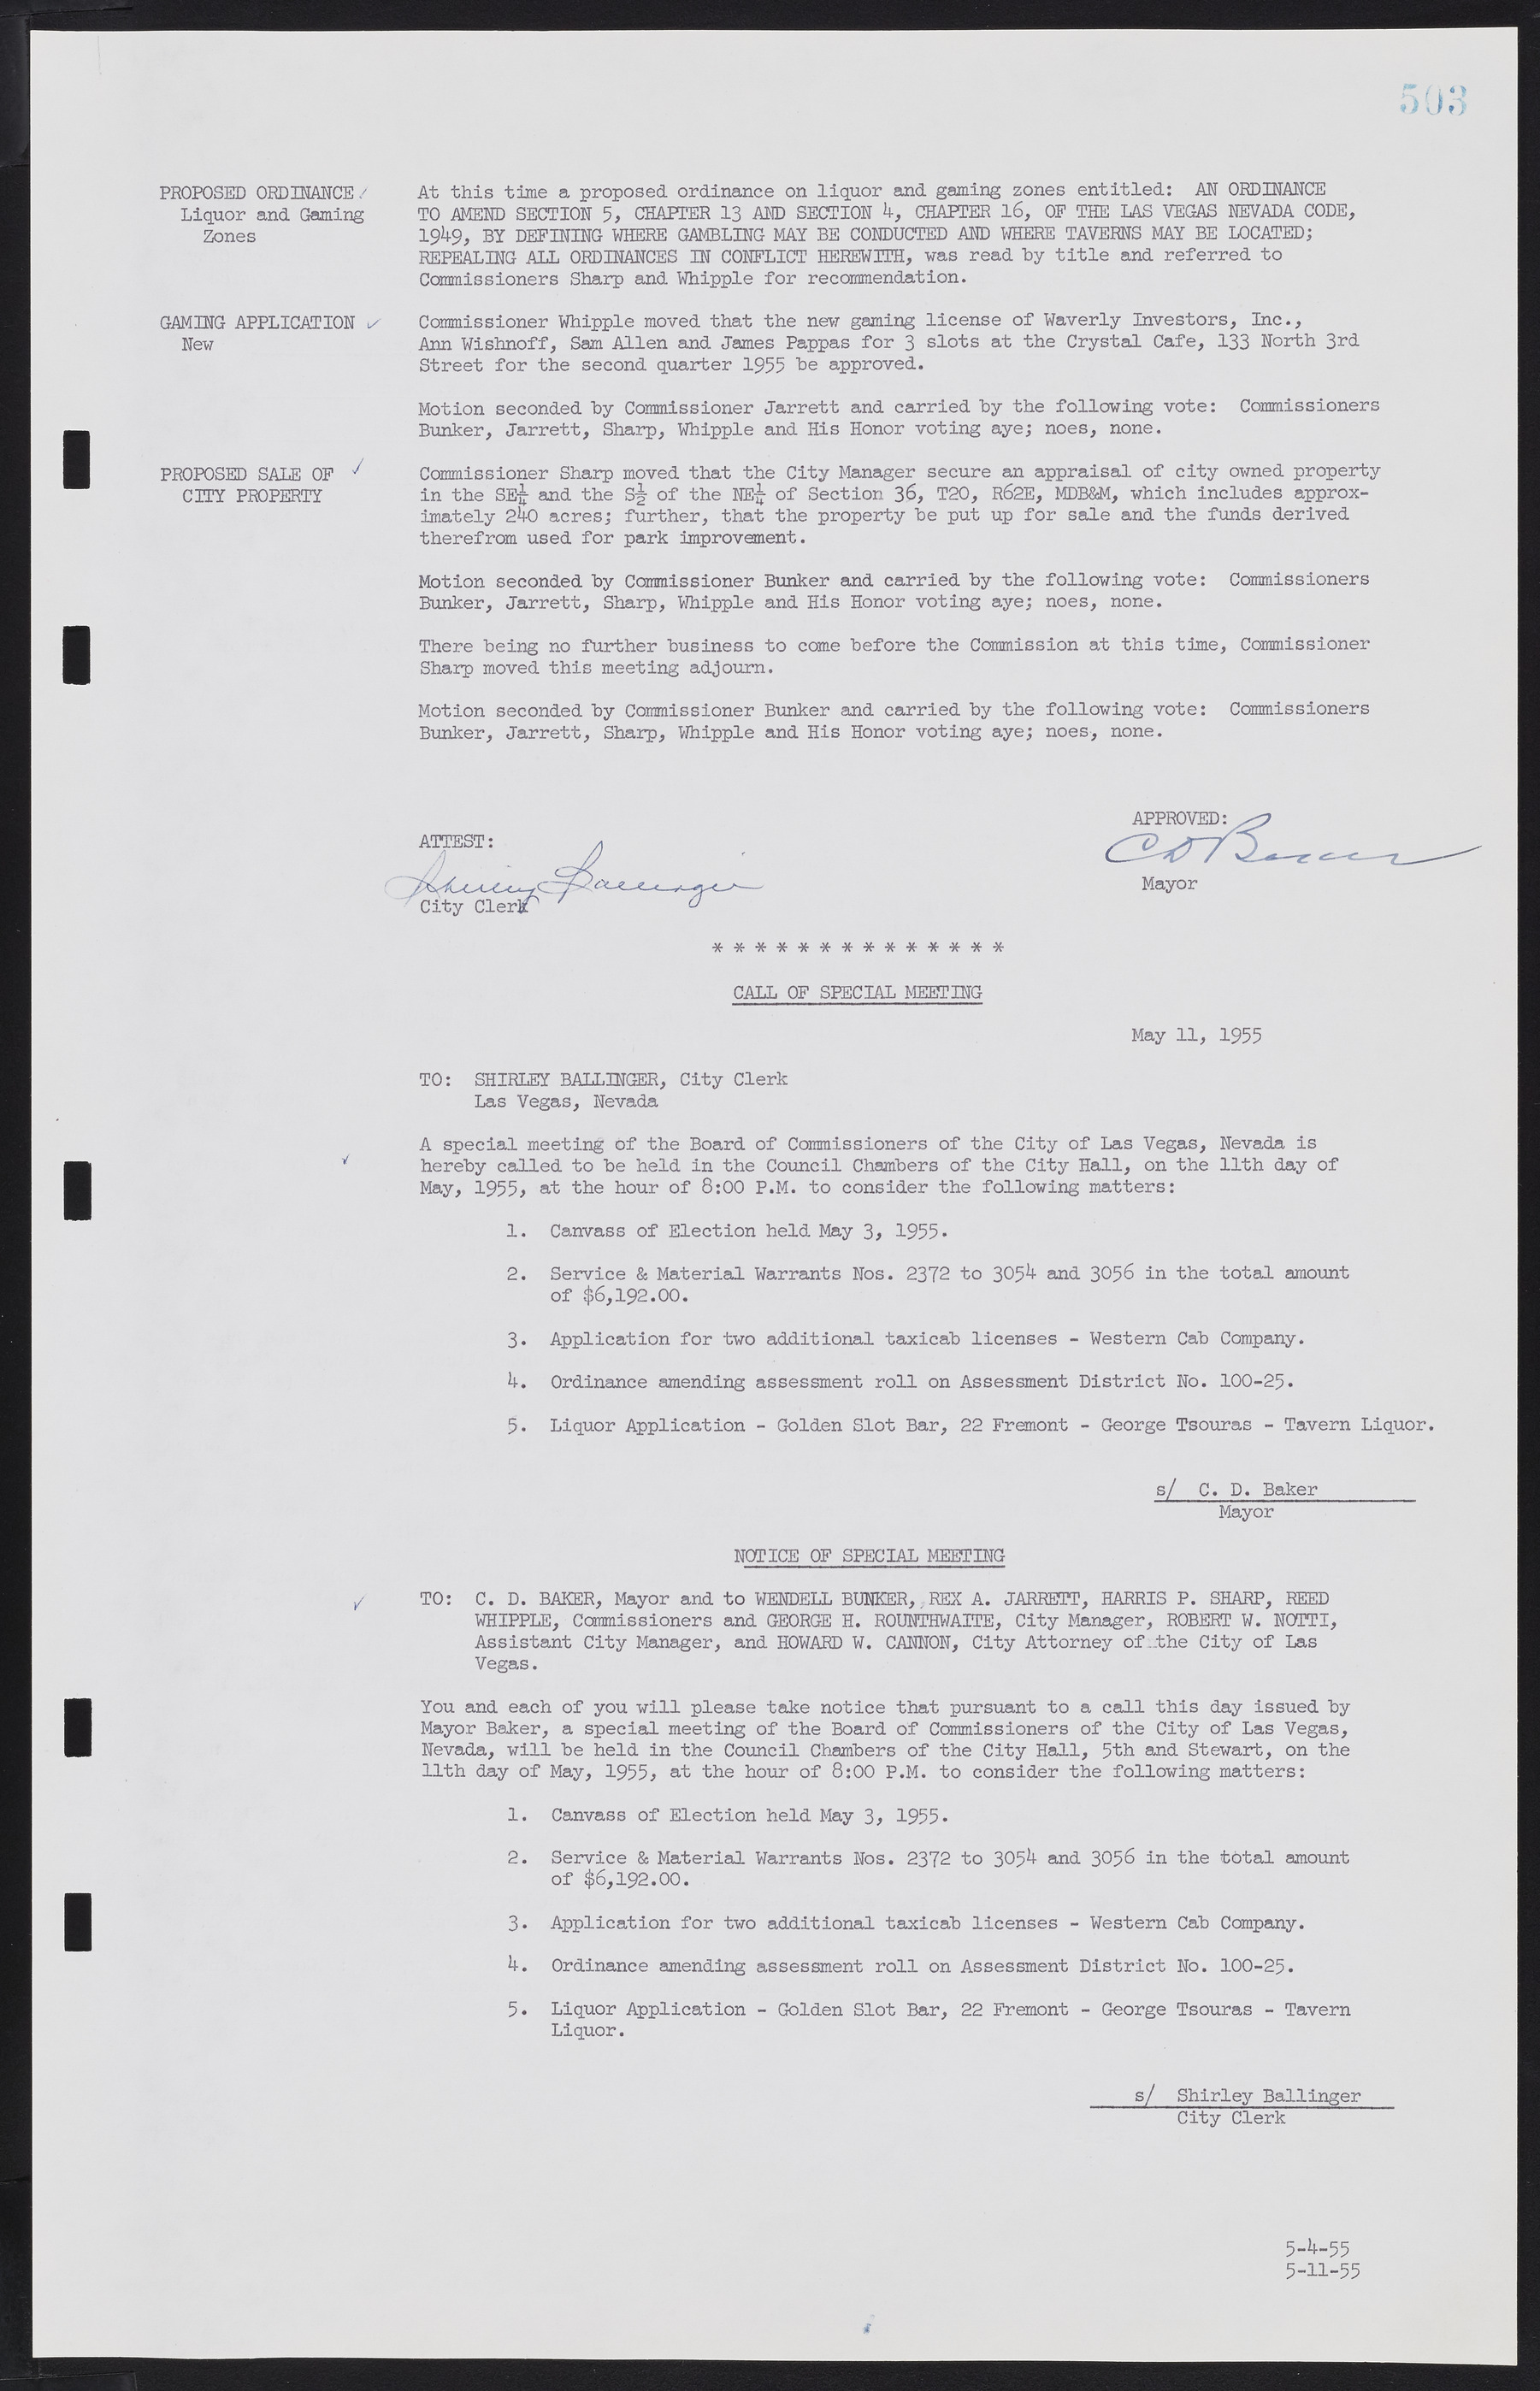 Las Vegas City Commission Minutes, February 17, 1954 to September 21, 1955, lvc000009-509